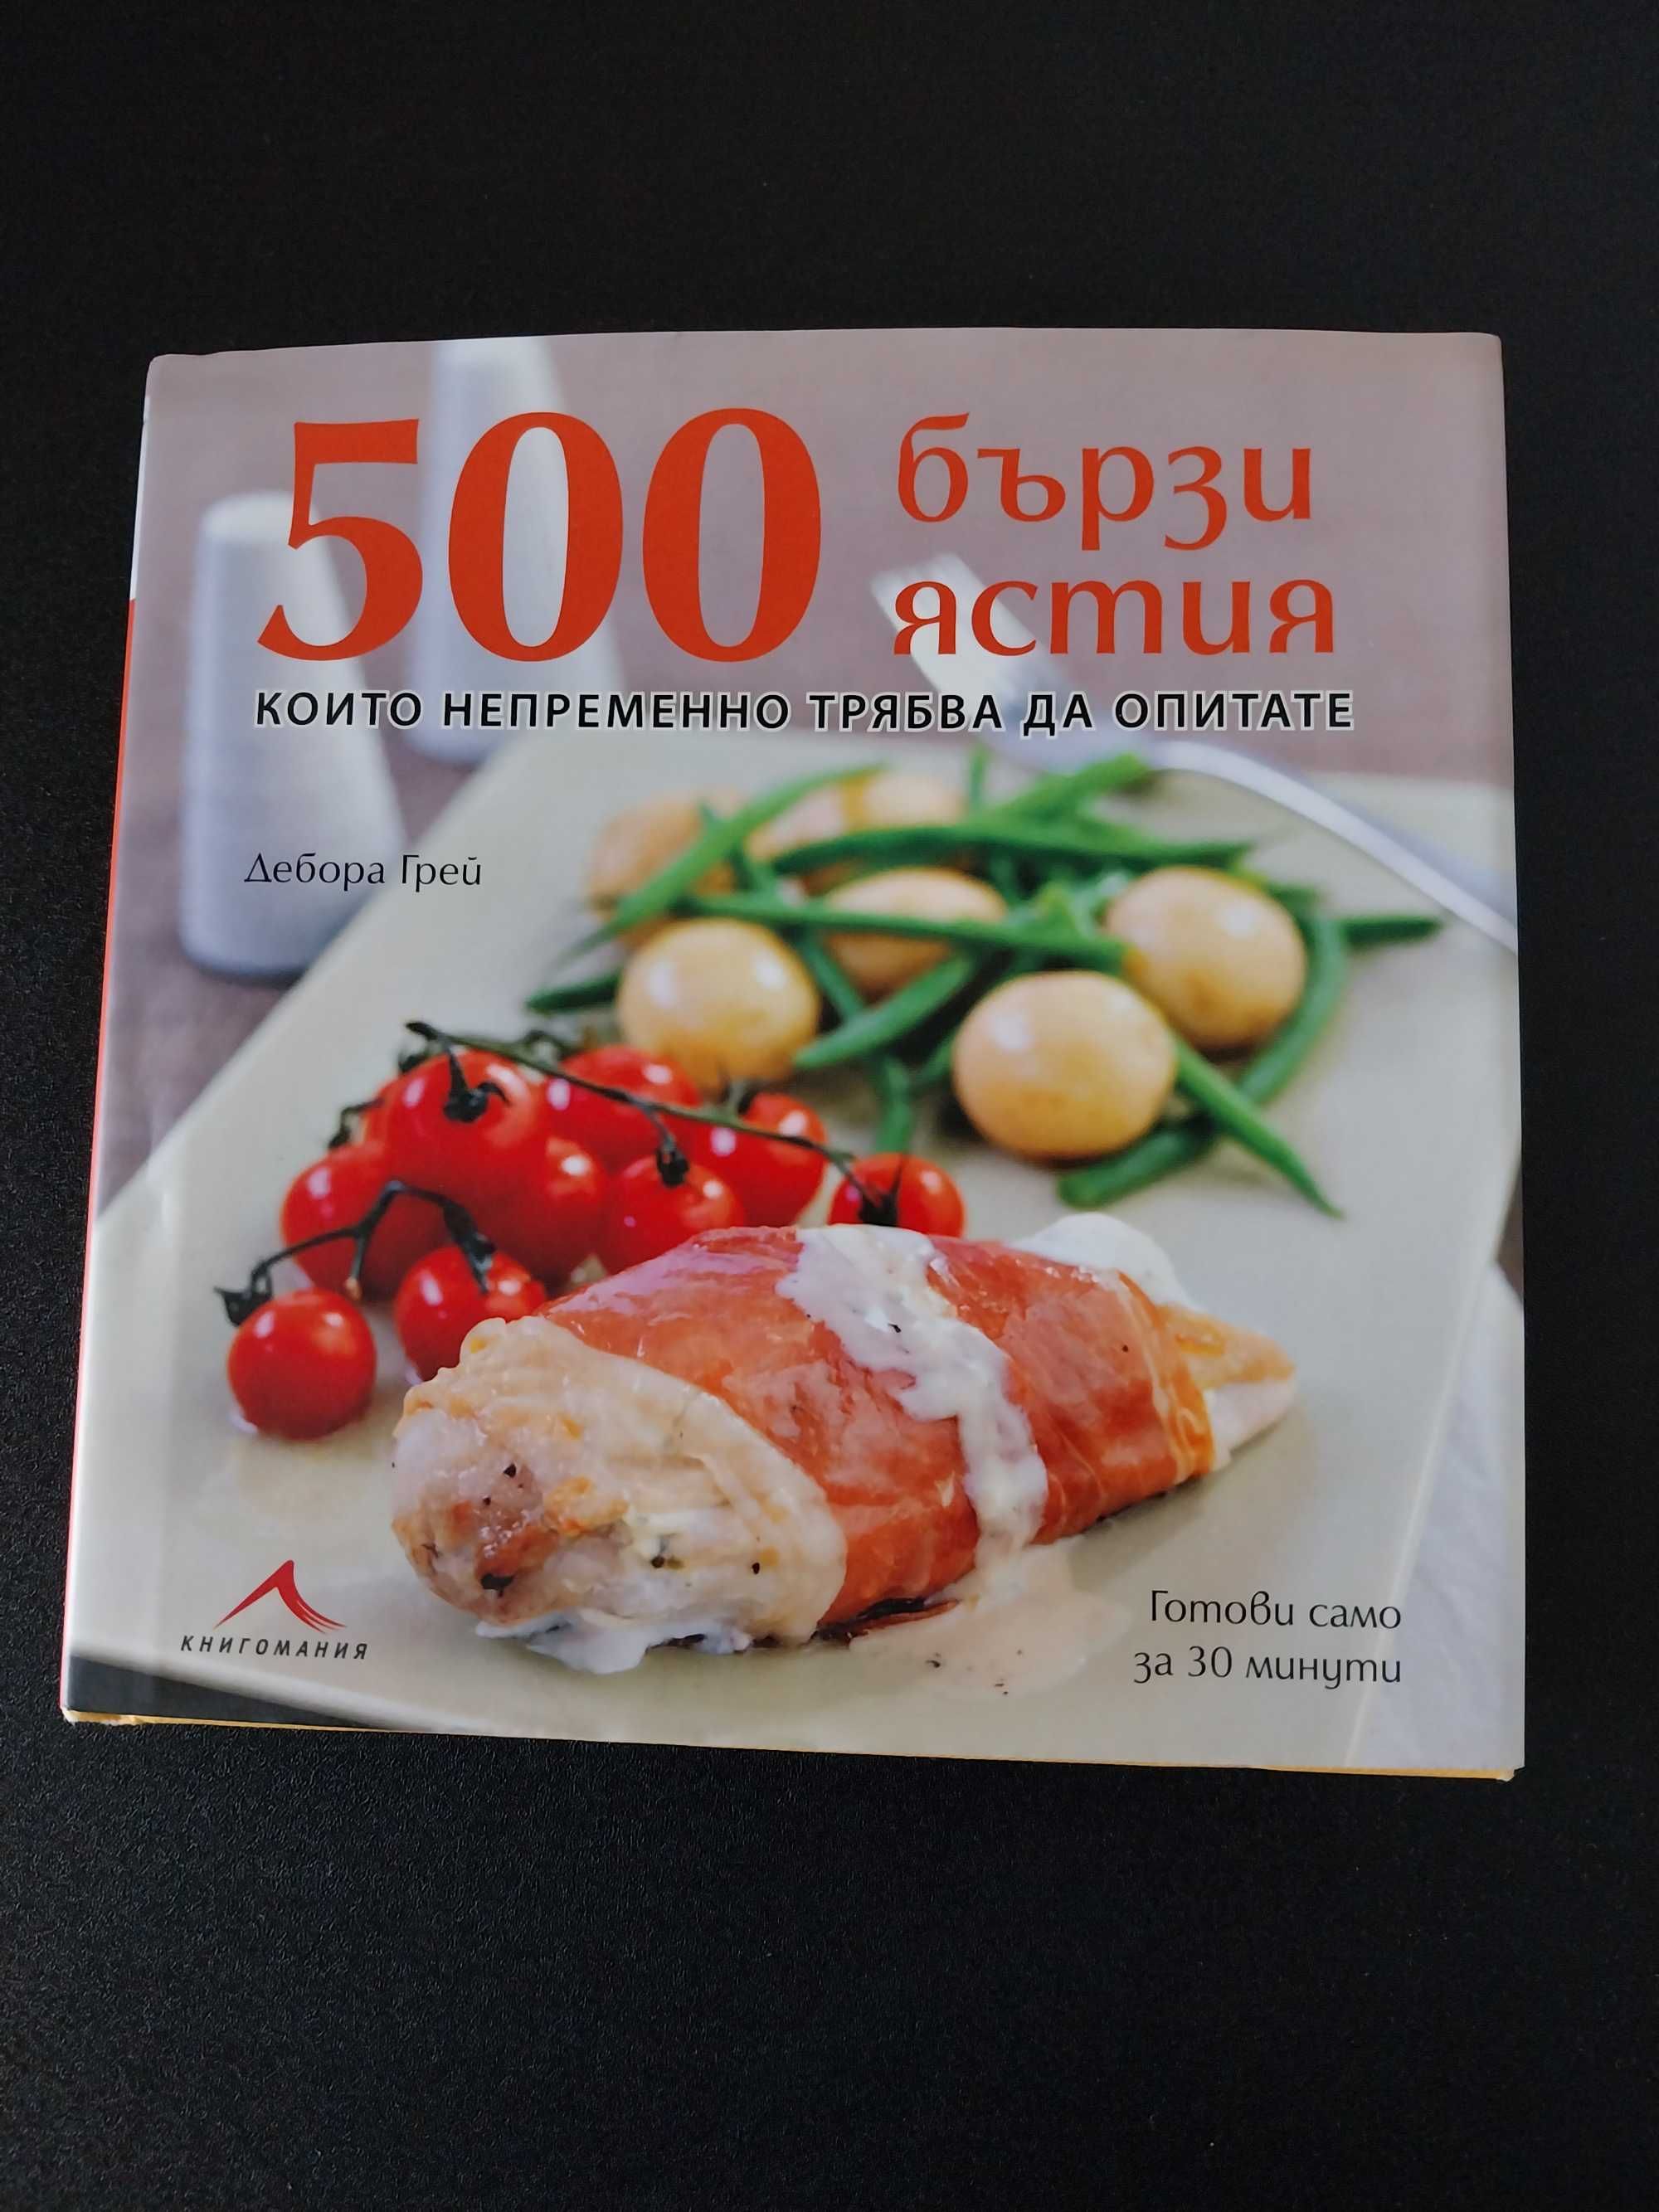 500 готварски рецепти